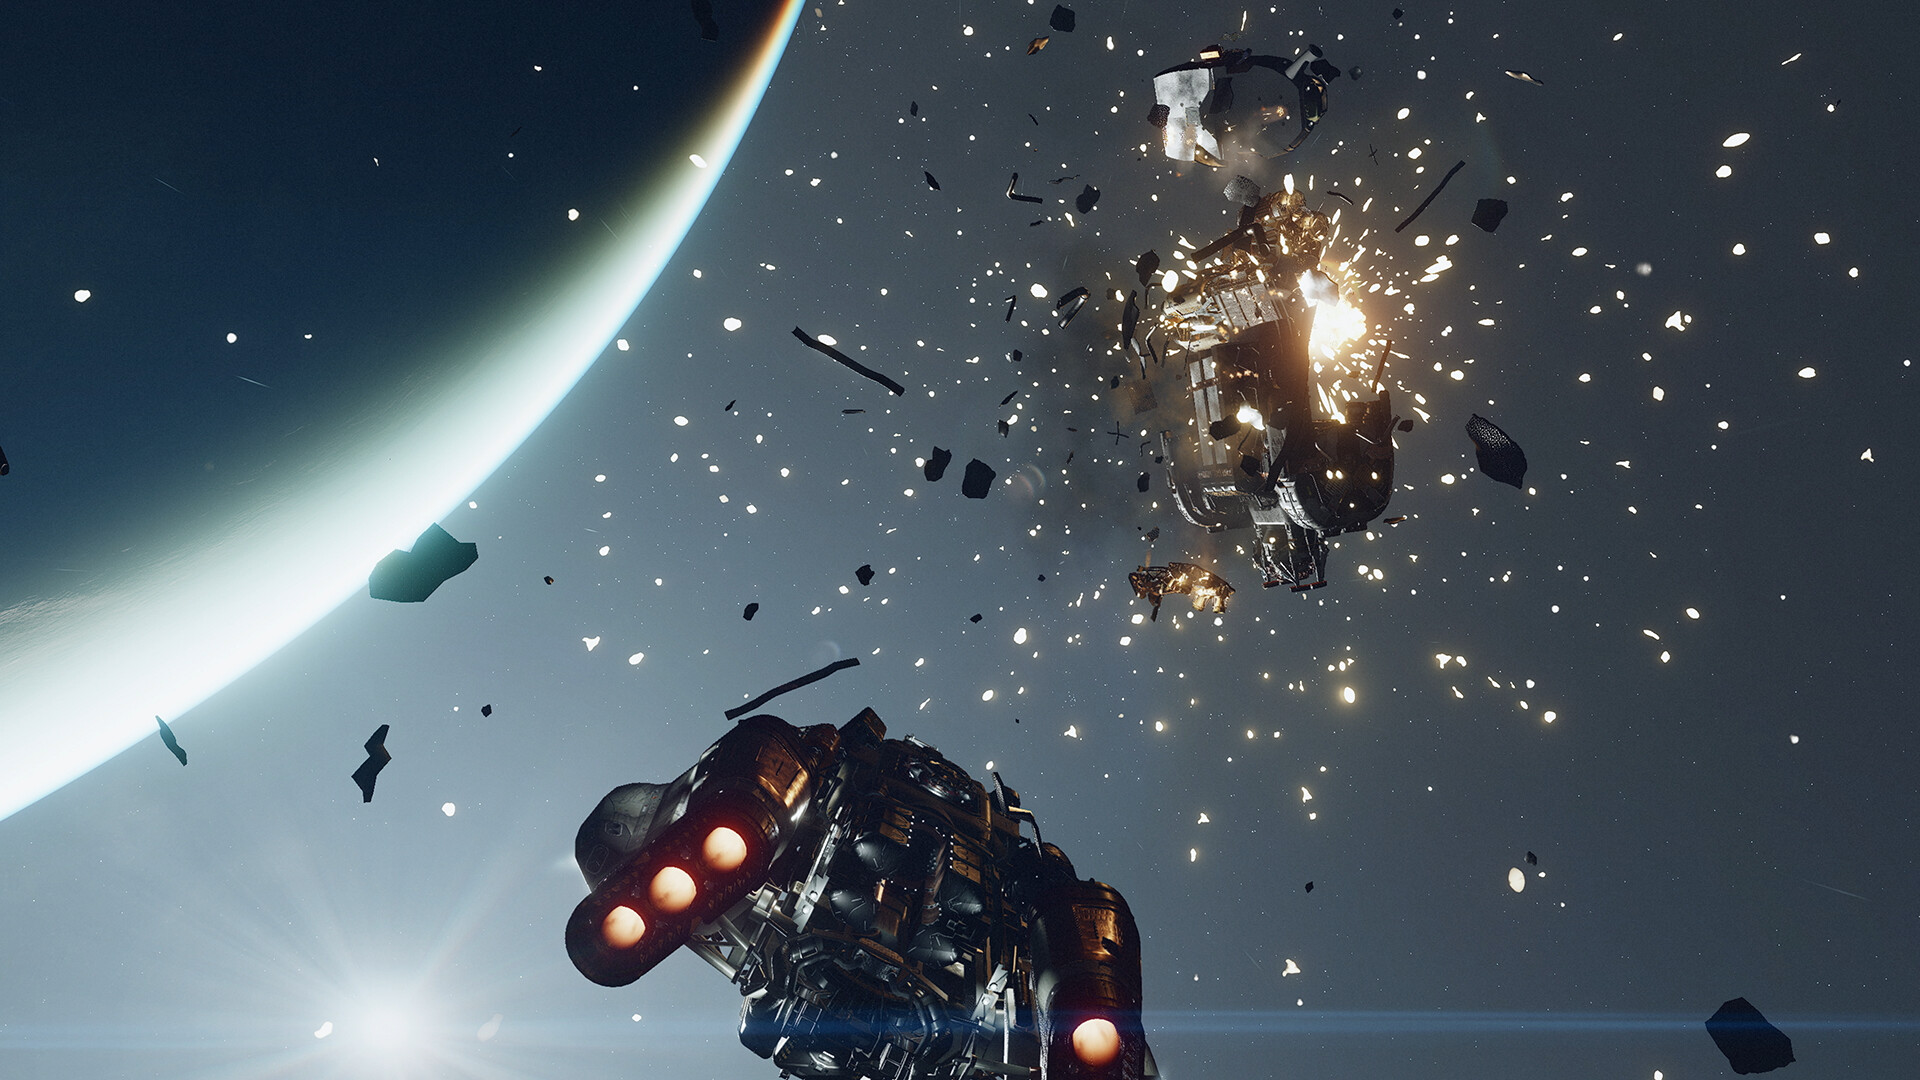 Outer Space: War Gears Steam Charts · SteamDB